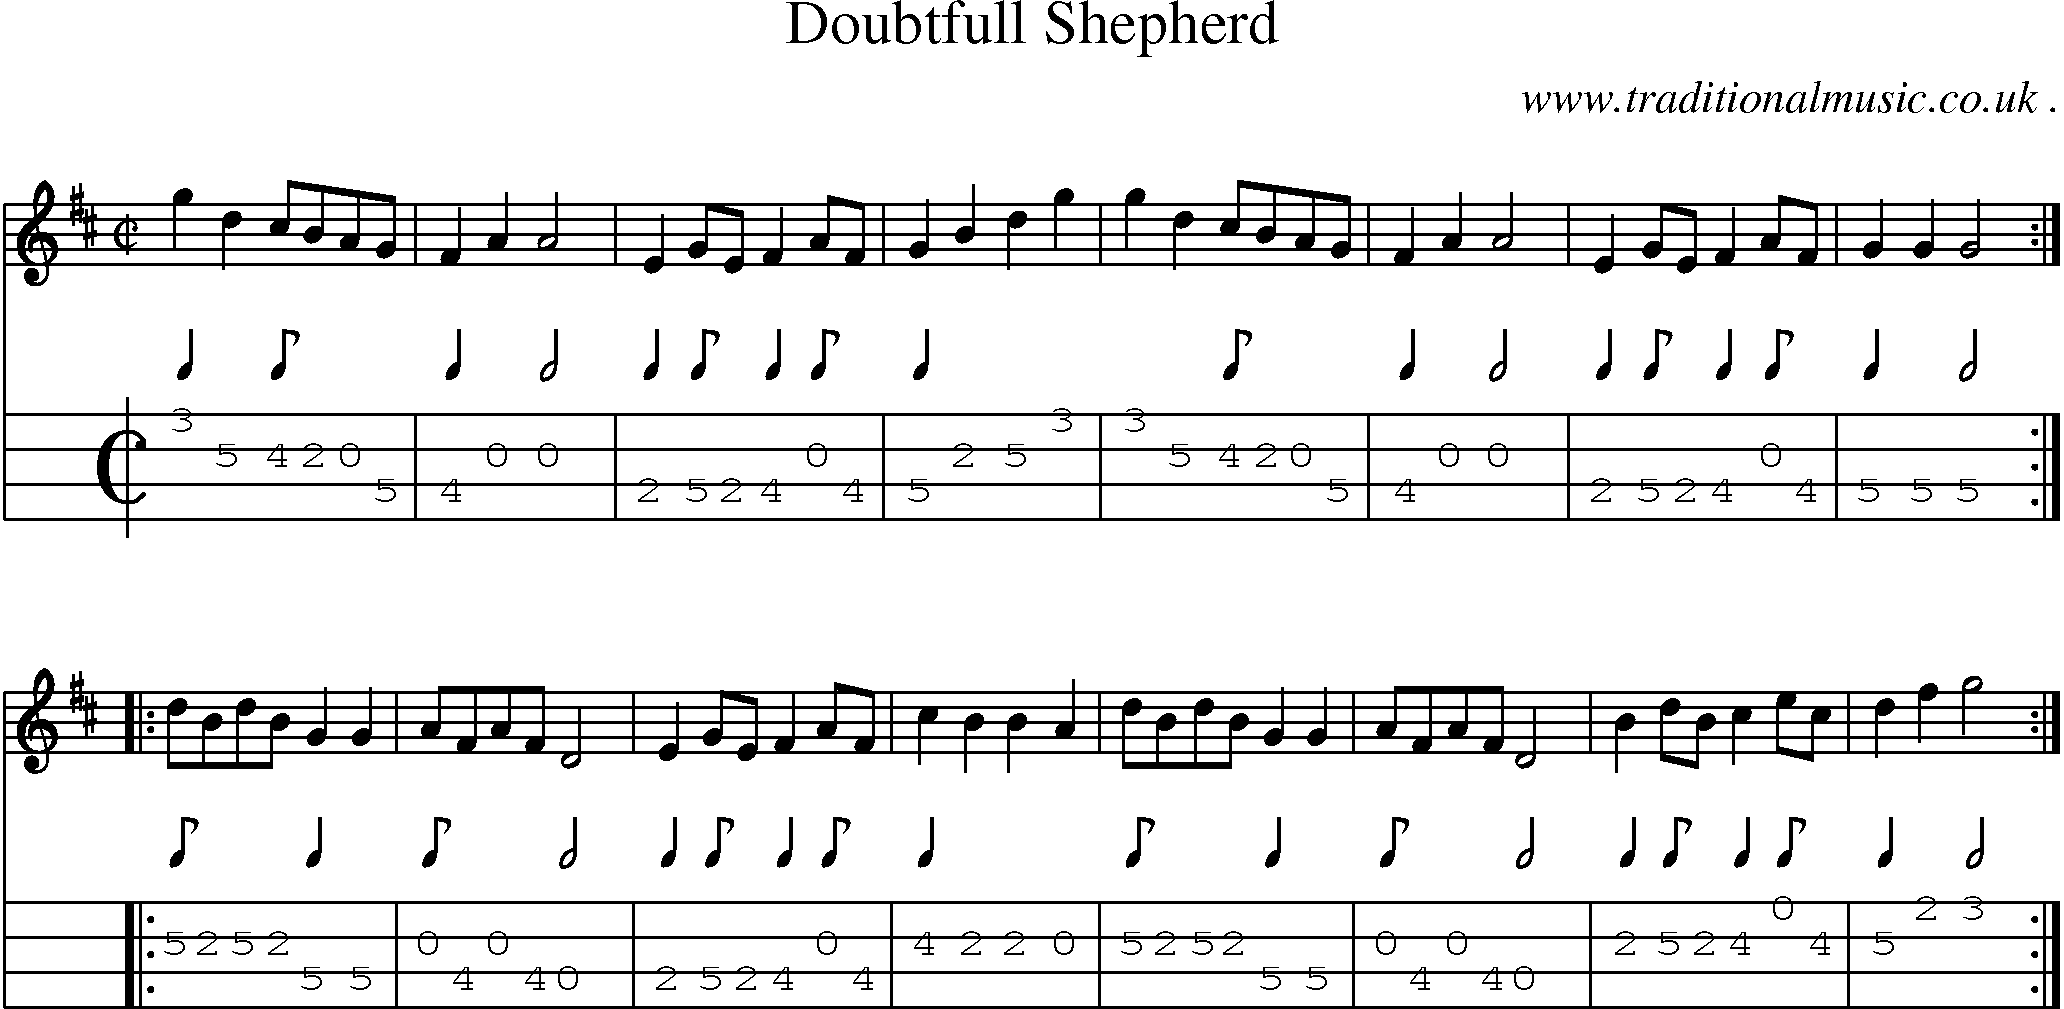 Sheet-Music and Mandolin Tabs for Doubtfull Shepherd